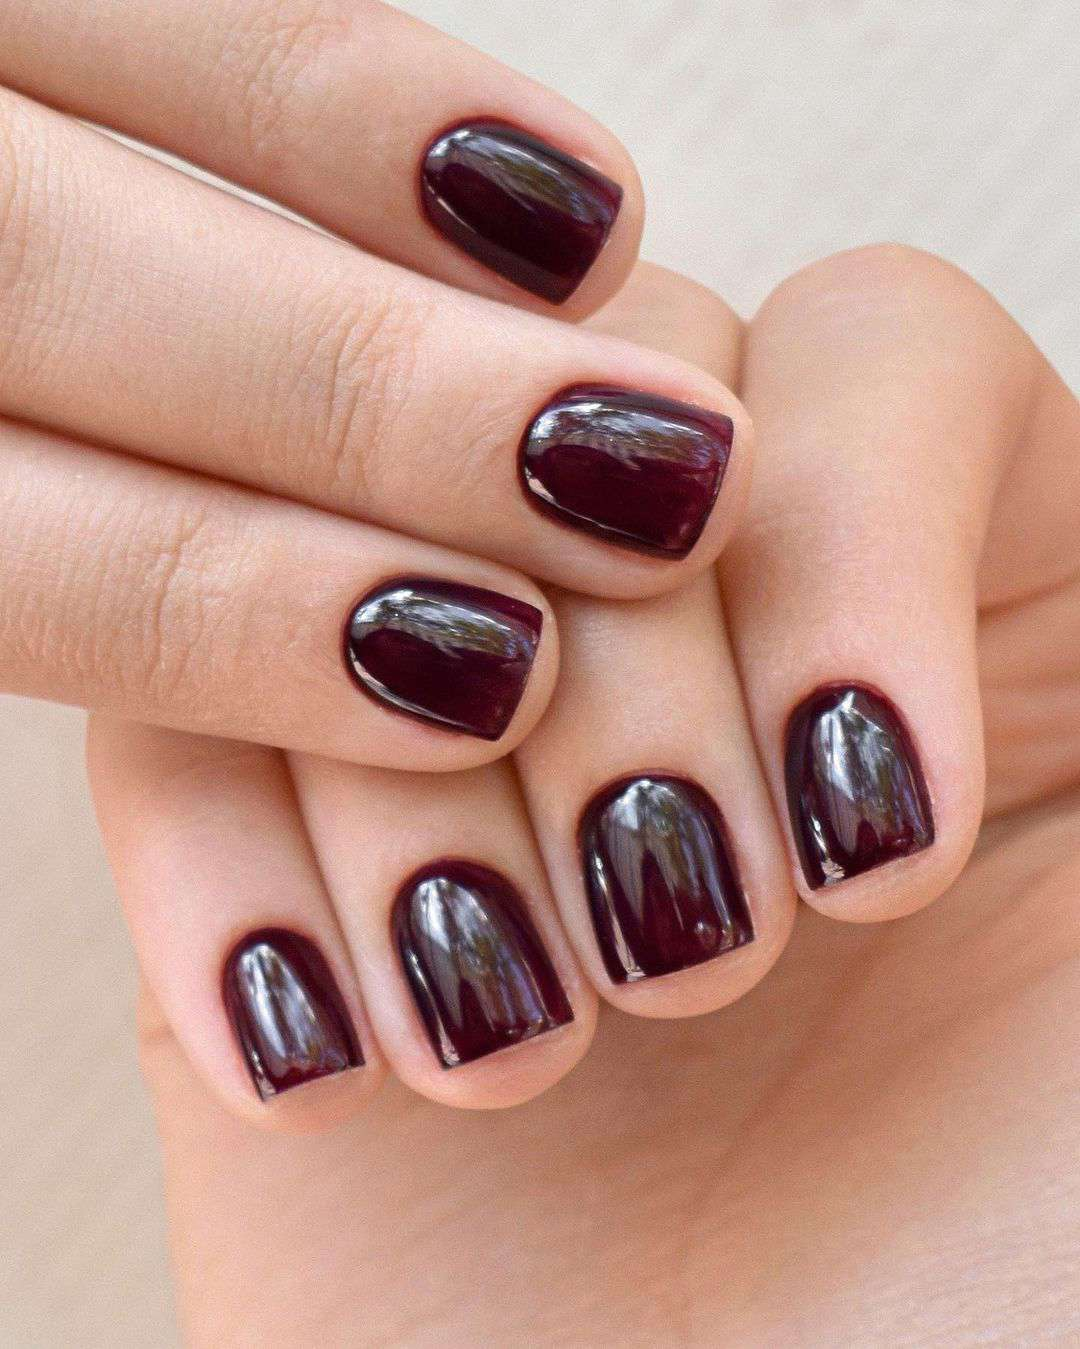 15 uñas permanentes bonitas para inspirarte: burgundy